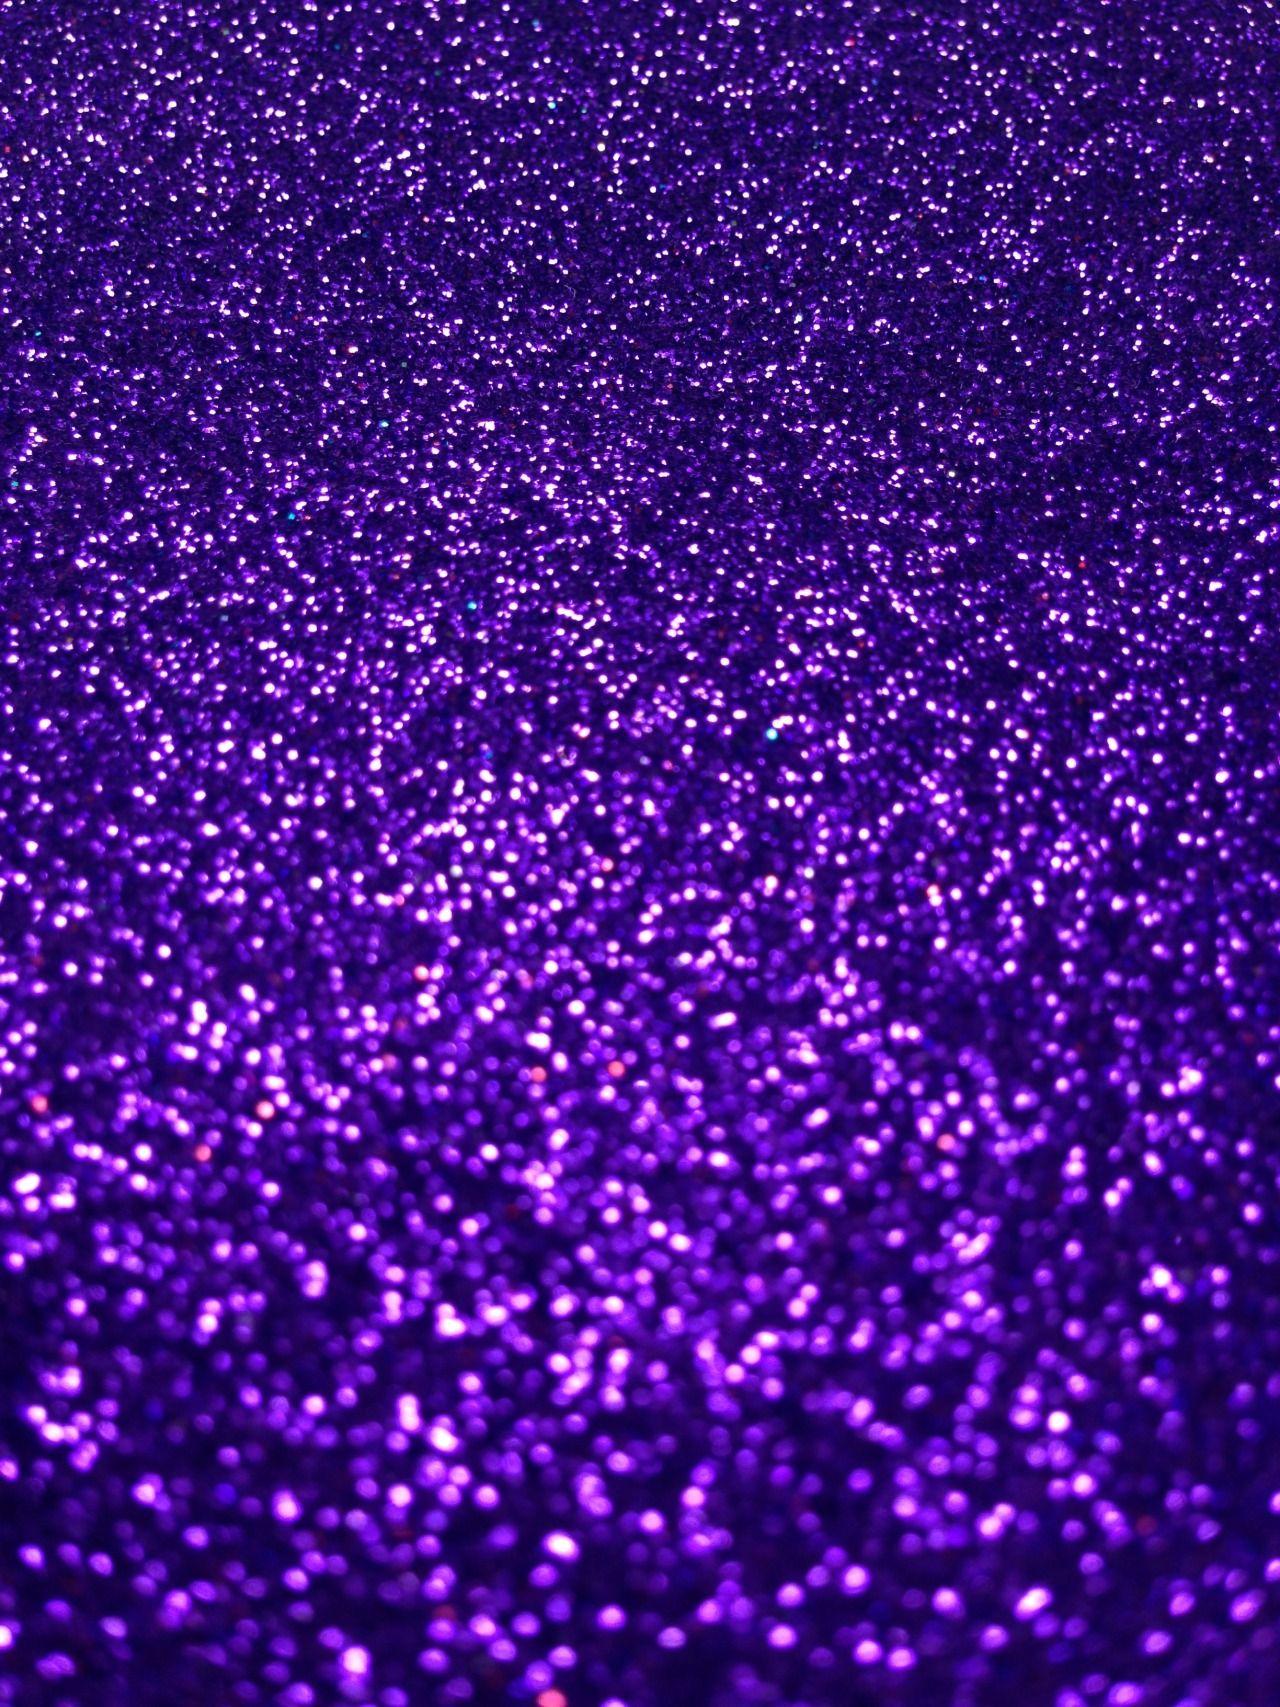 Purple Tumblr Wallpapers - Top Free Purple Tumblr Backgrounds ...